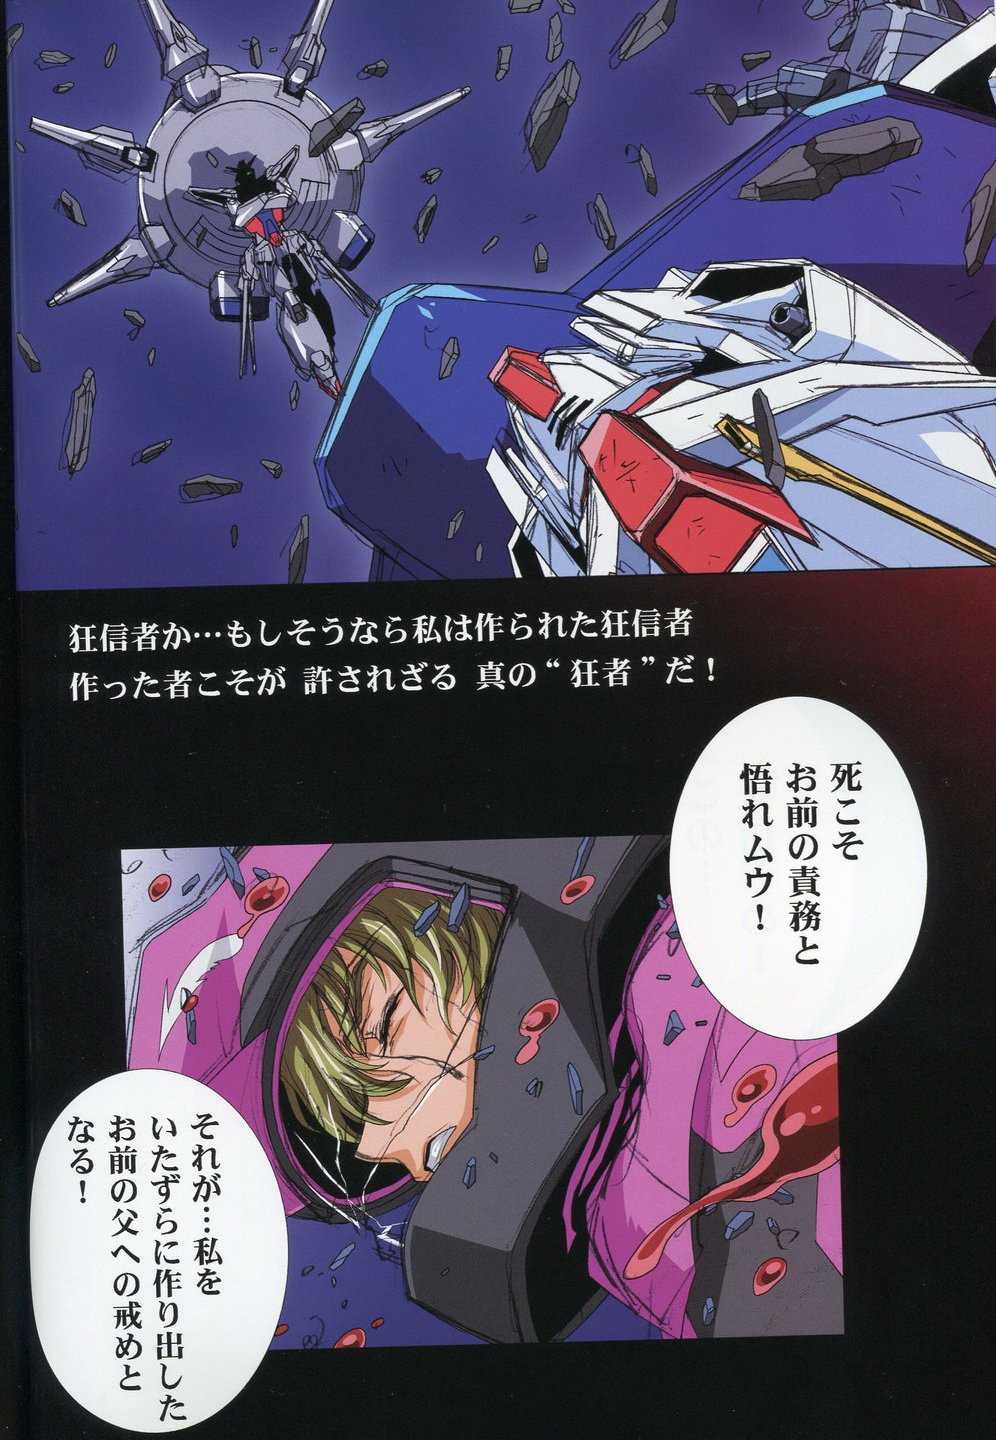 [HenReiKai] - Gundam SEED - Another Century D.E. 6 Destiny Epilogue/Epiroge 